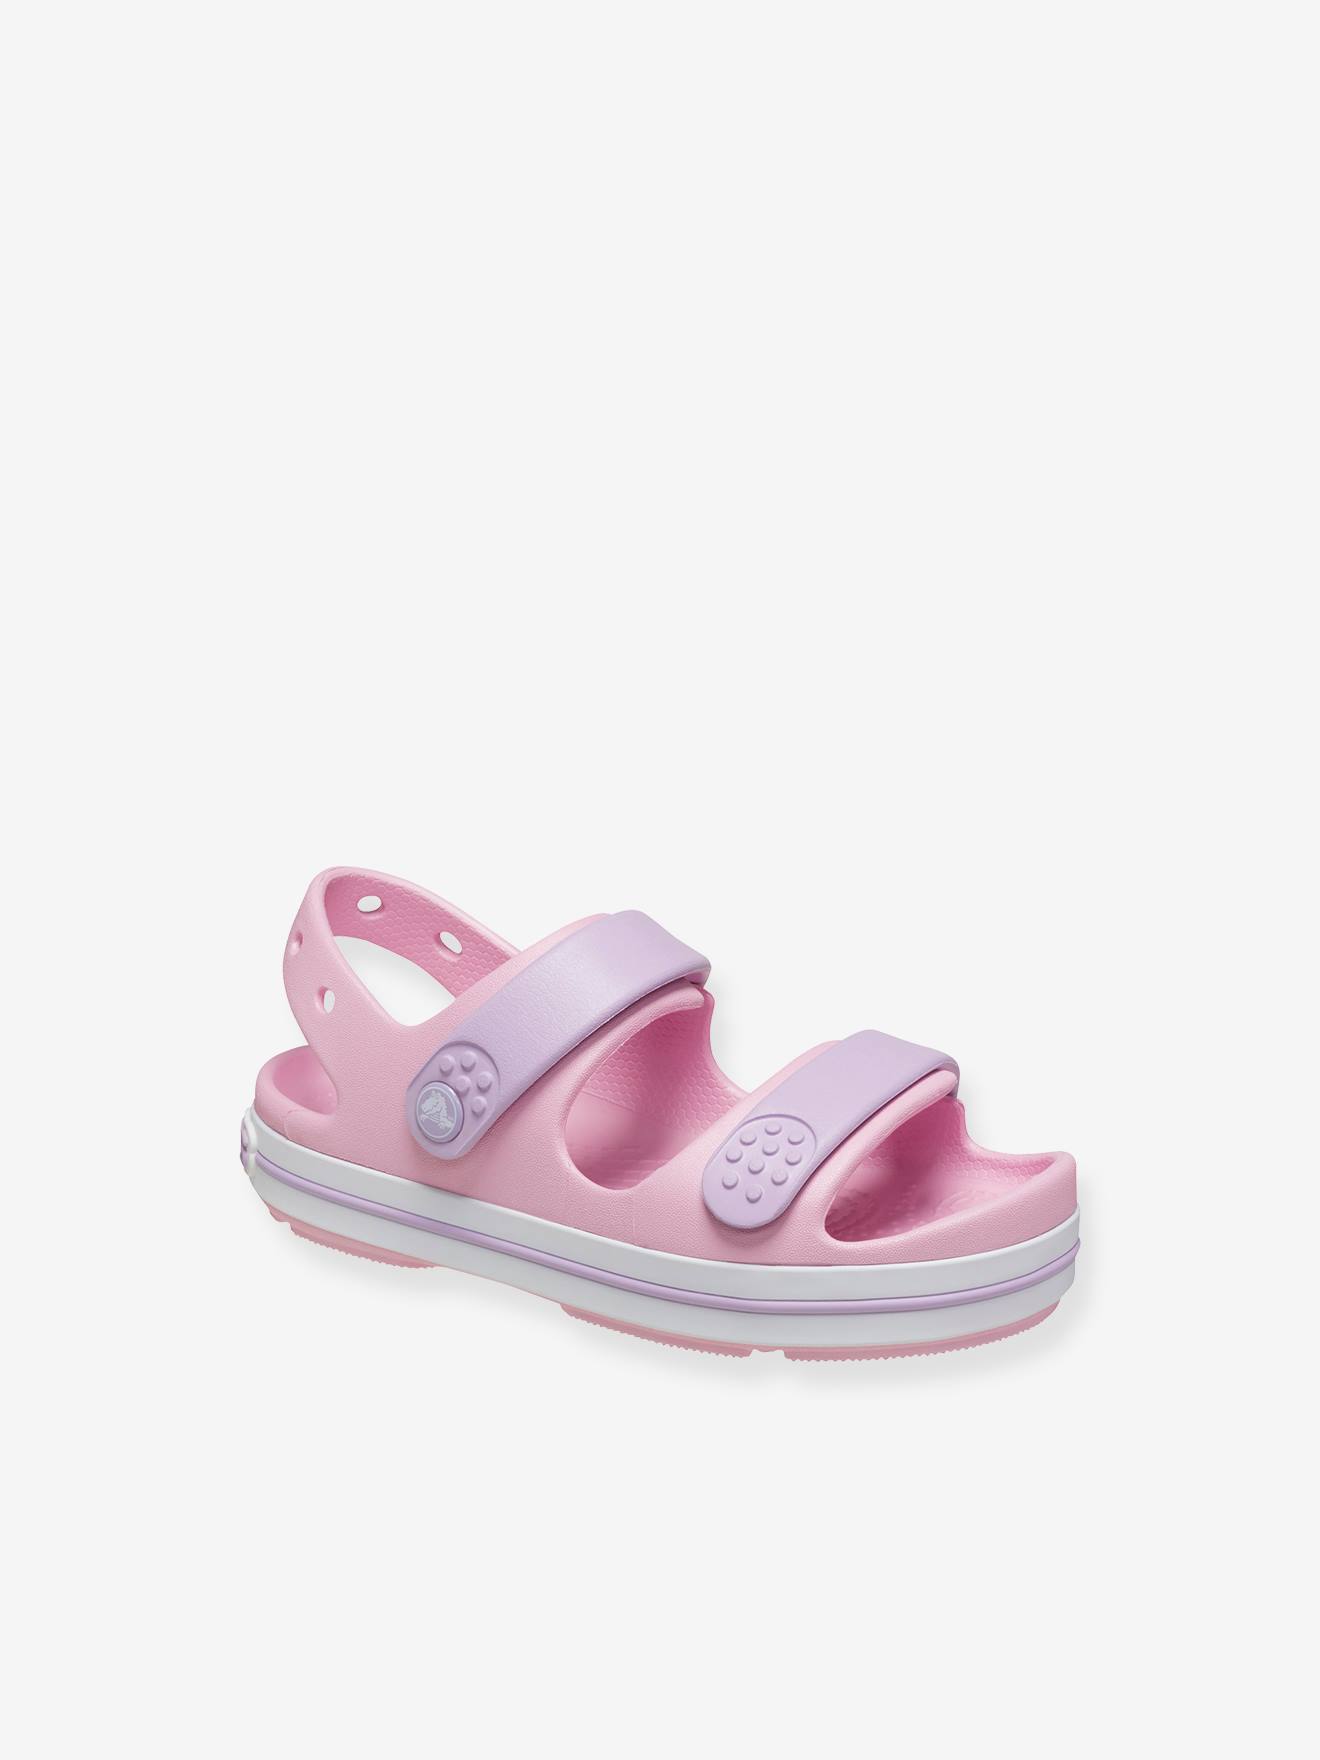 Clogs for Babies, 209424 Crocband Cruiser Sandal CROCS pale pink